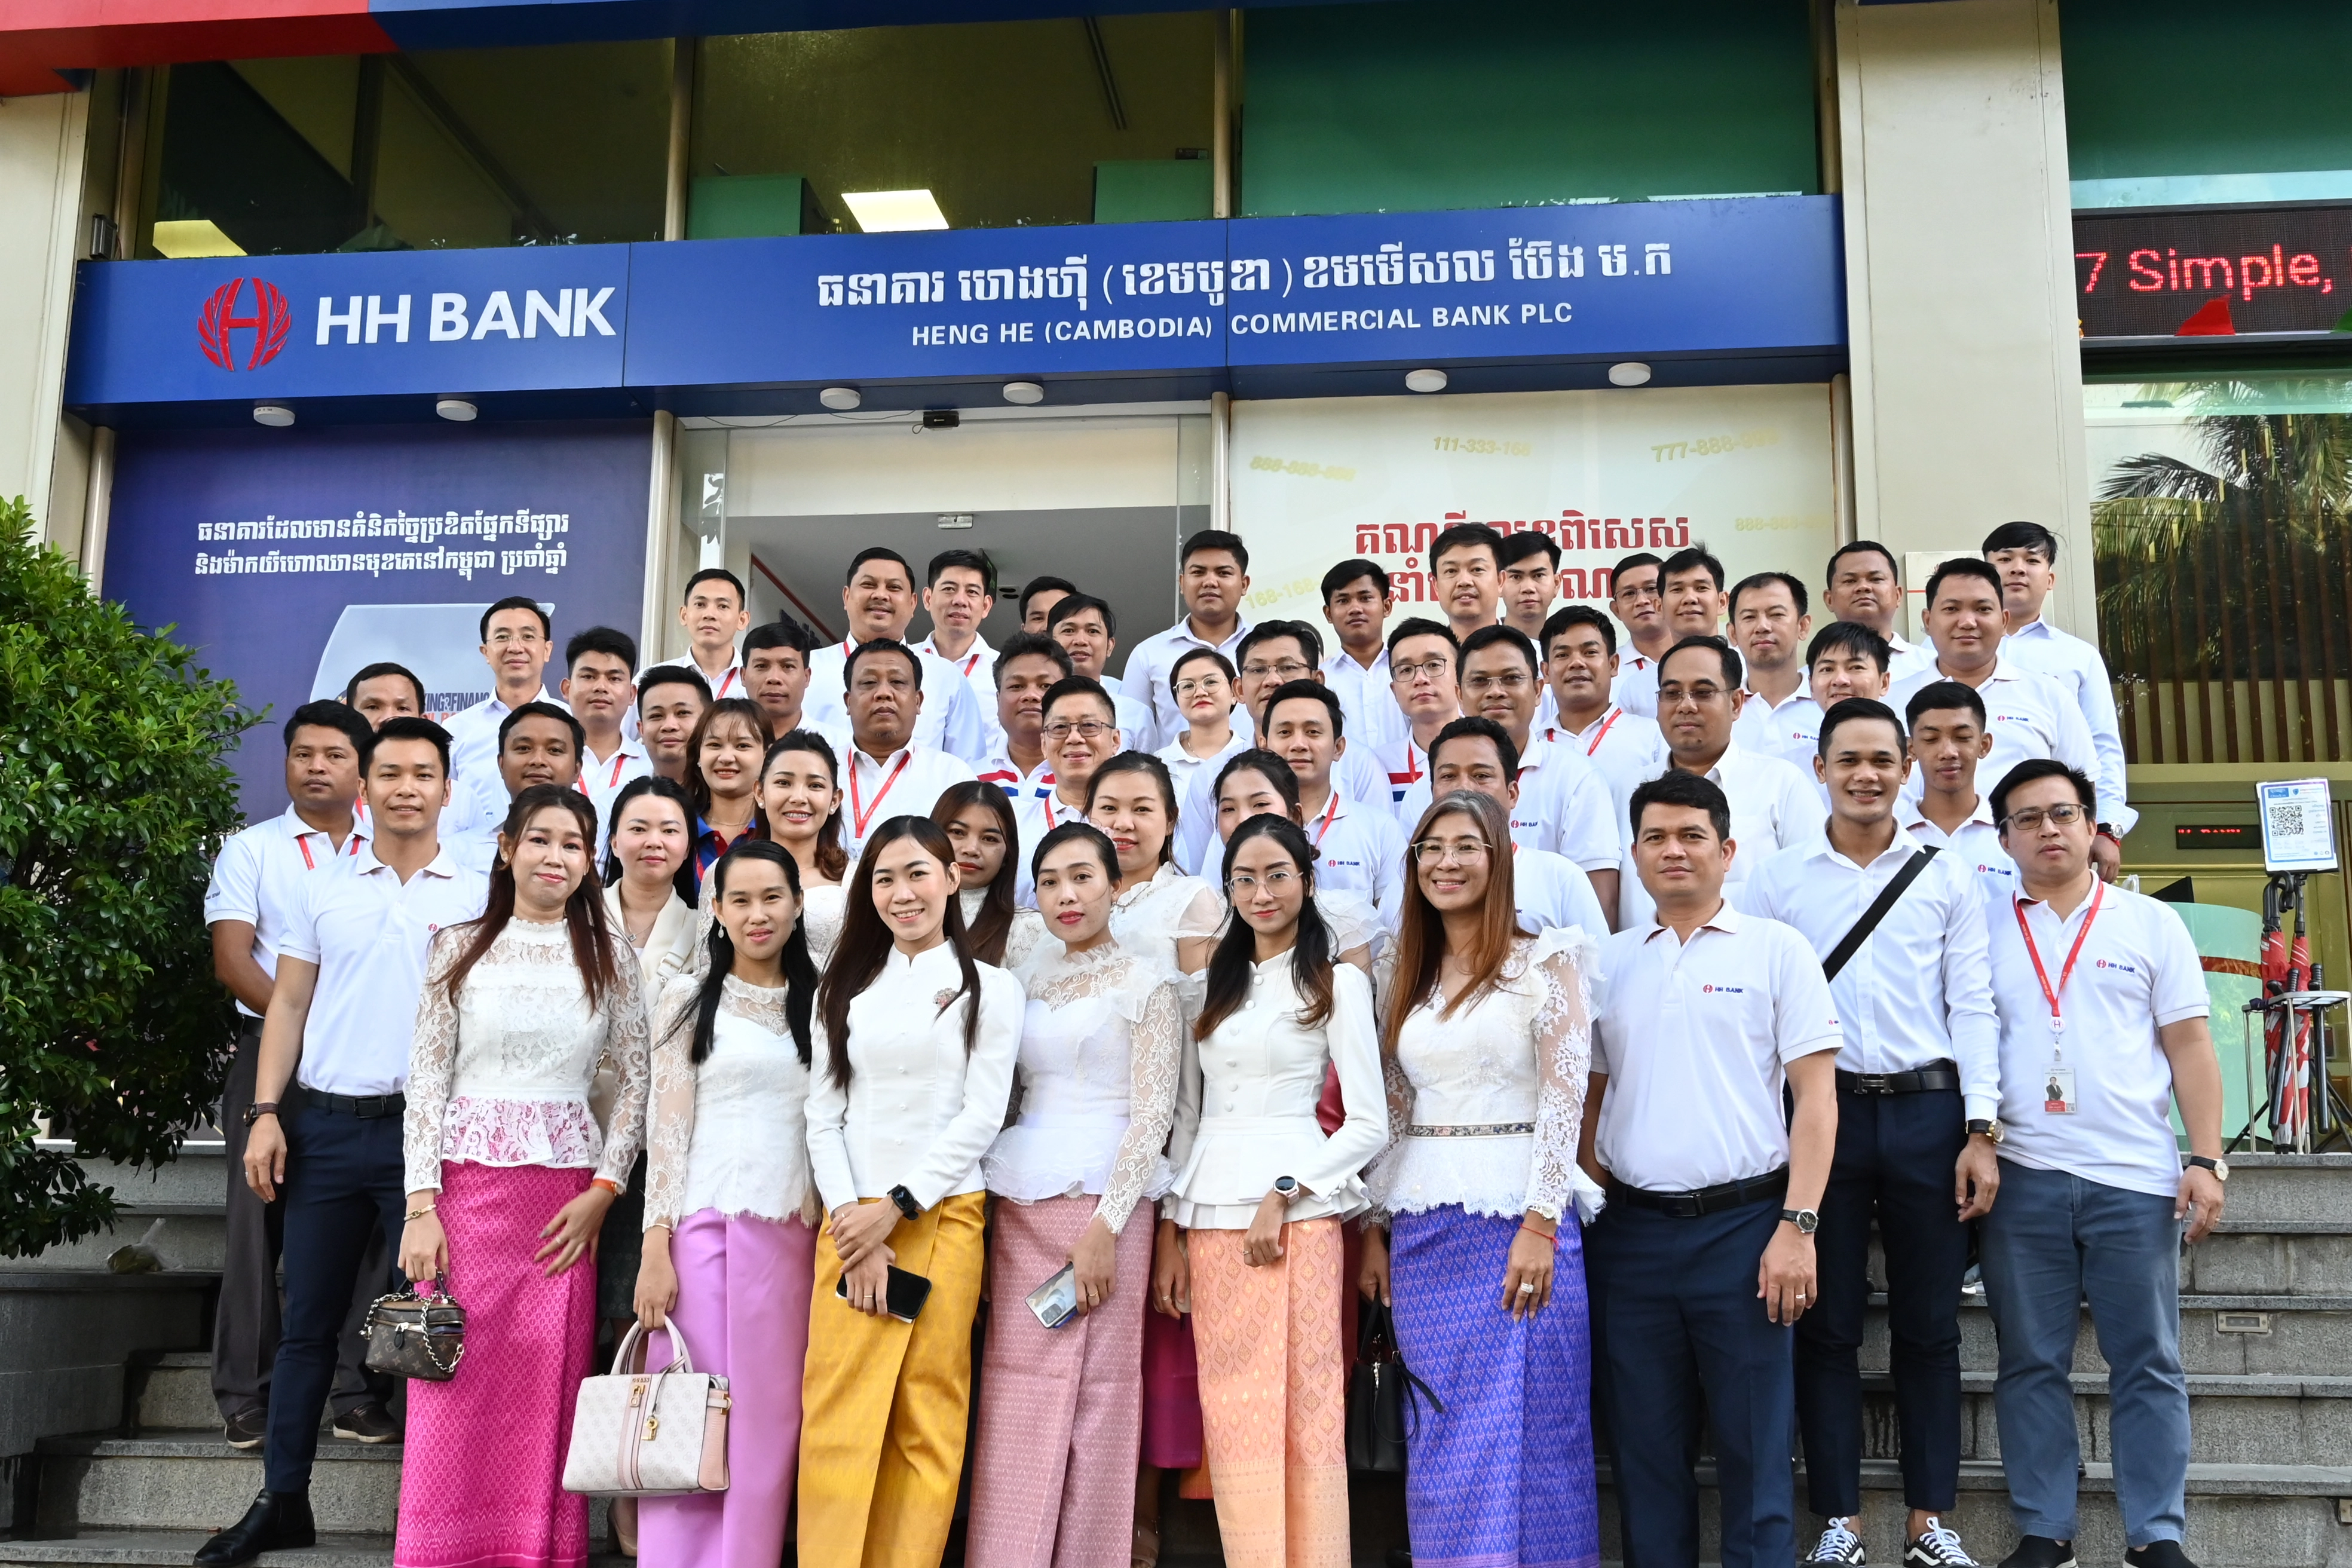 HH BANK joined the Kann Ben Event